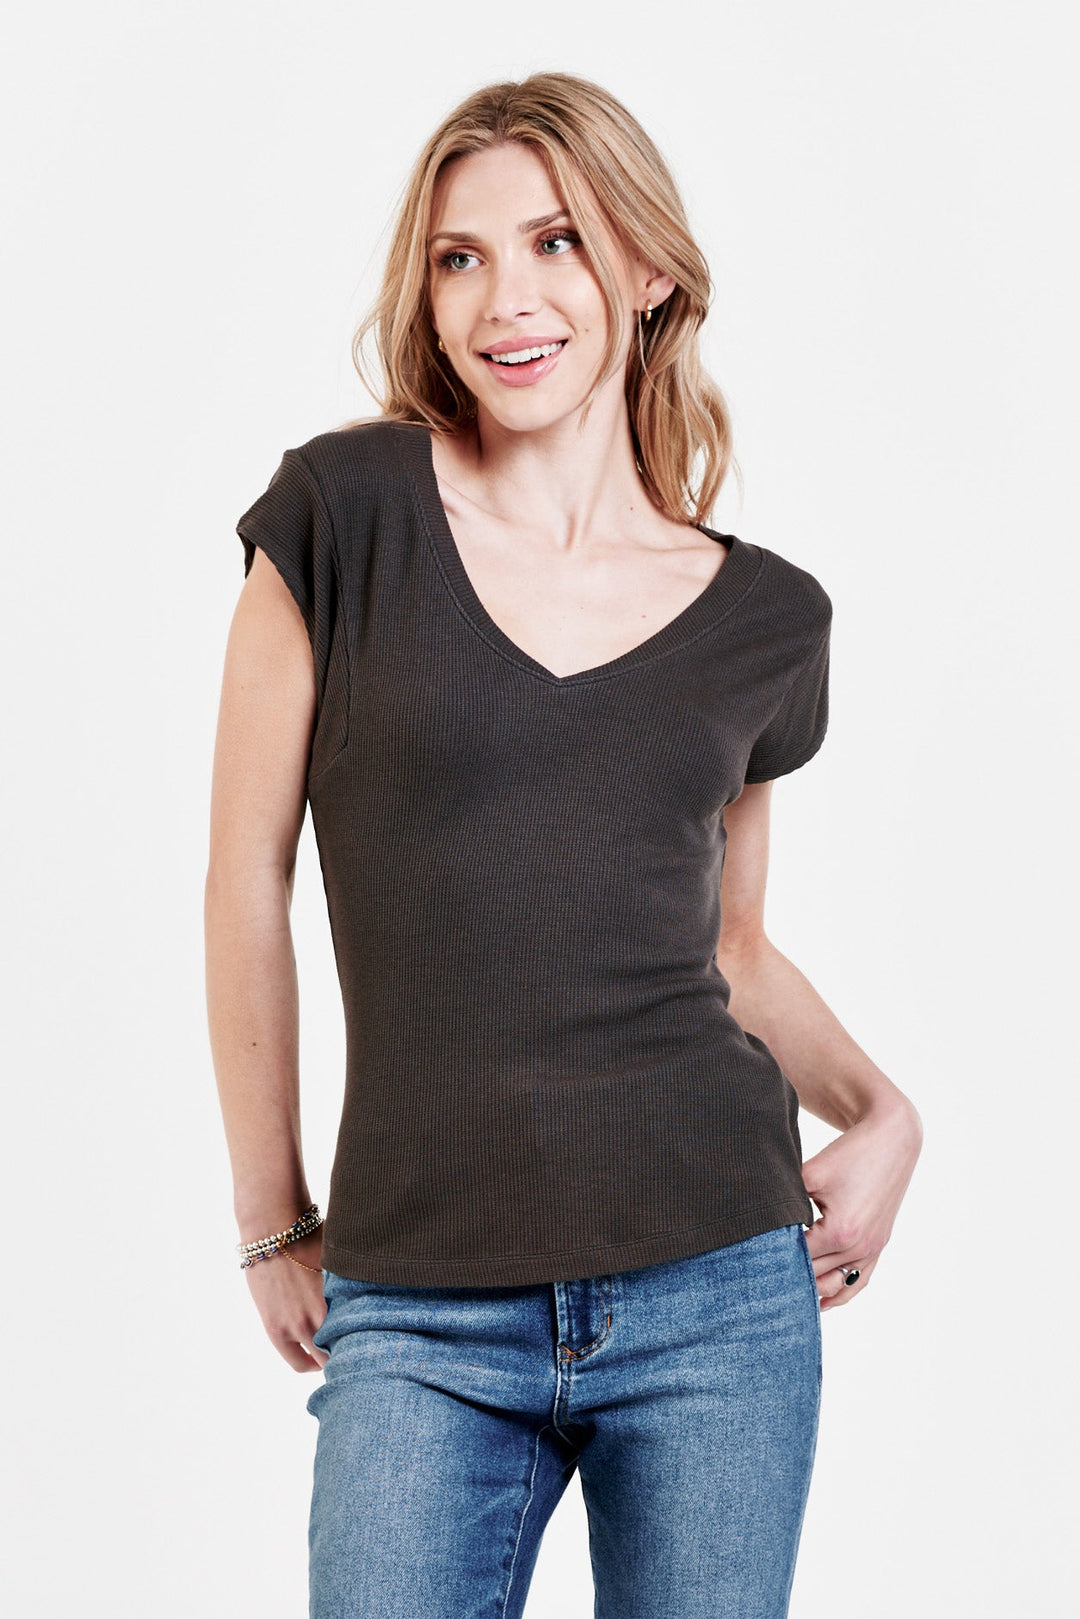 image of a female model wearing a URI THERMAL V-NECK TOP ONYX DEAR JOHN DENIM 